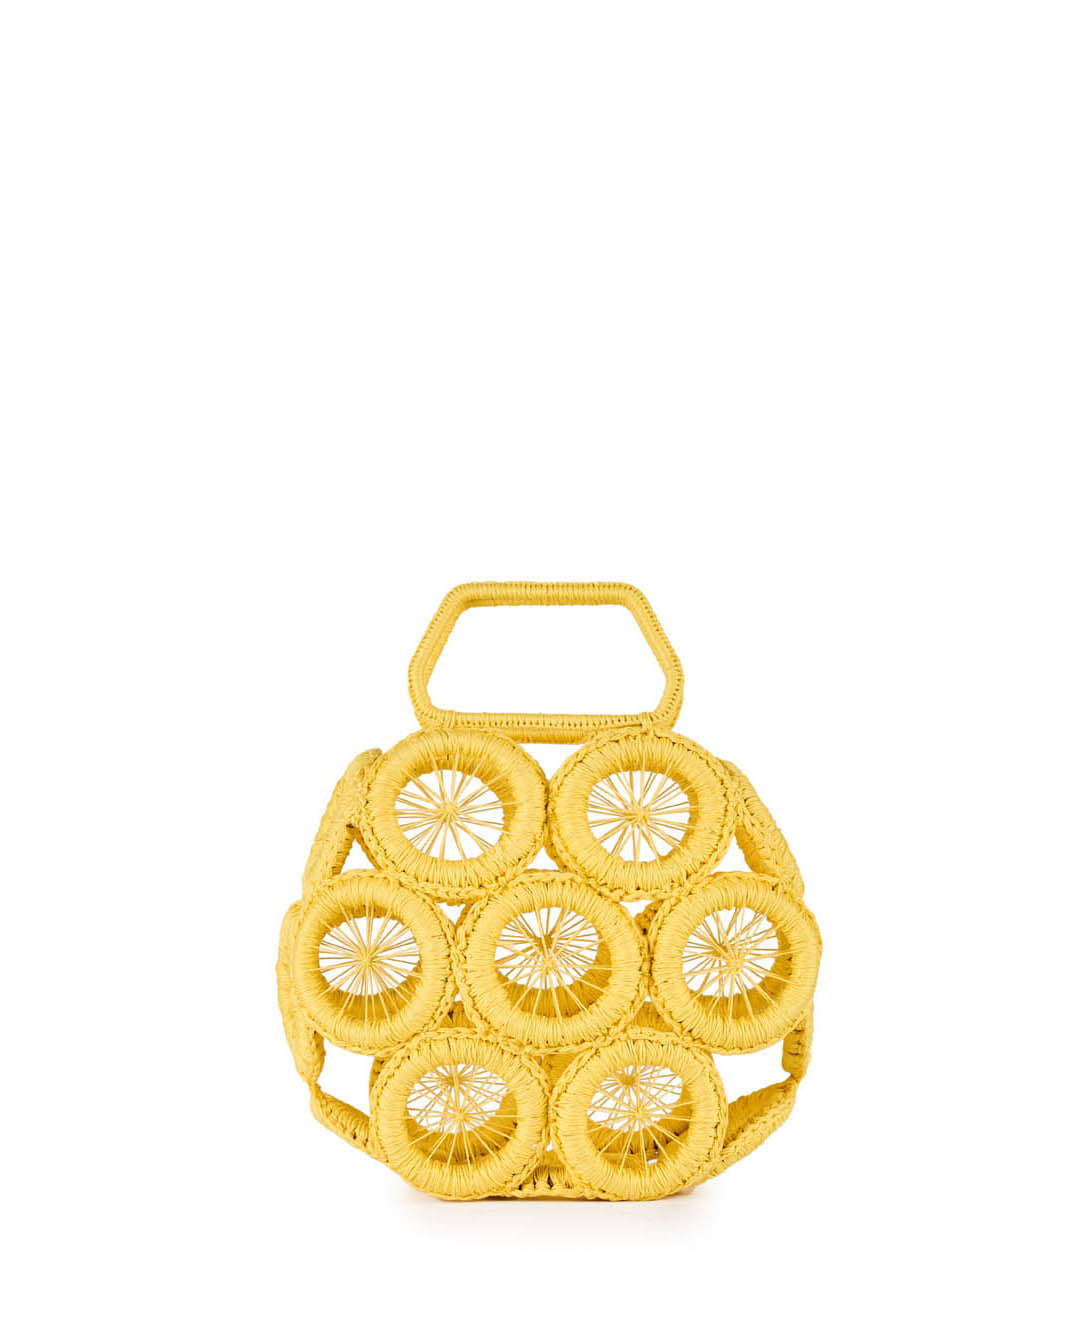 Yellow woven rattan handbag with circular design on white background